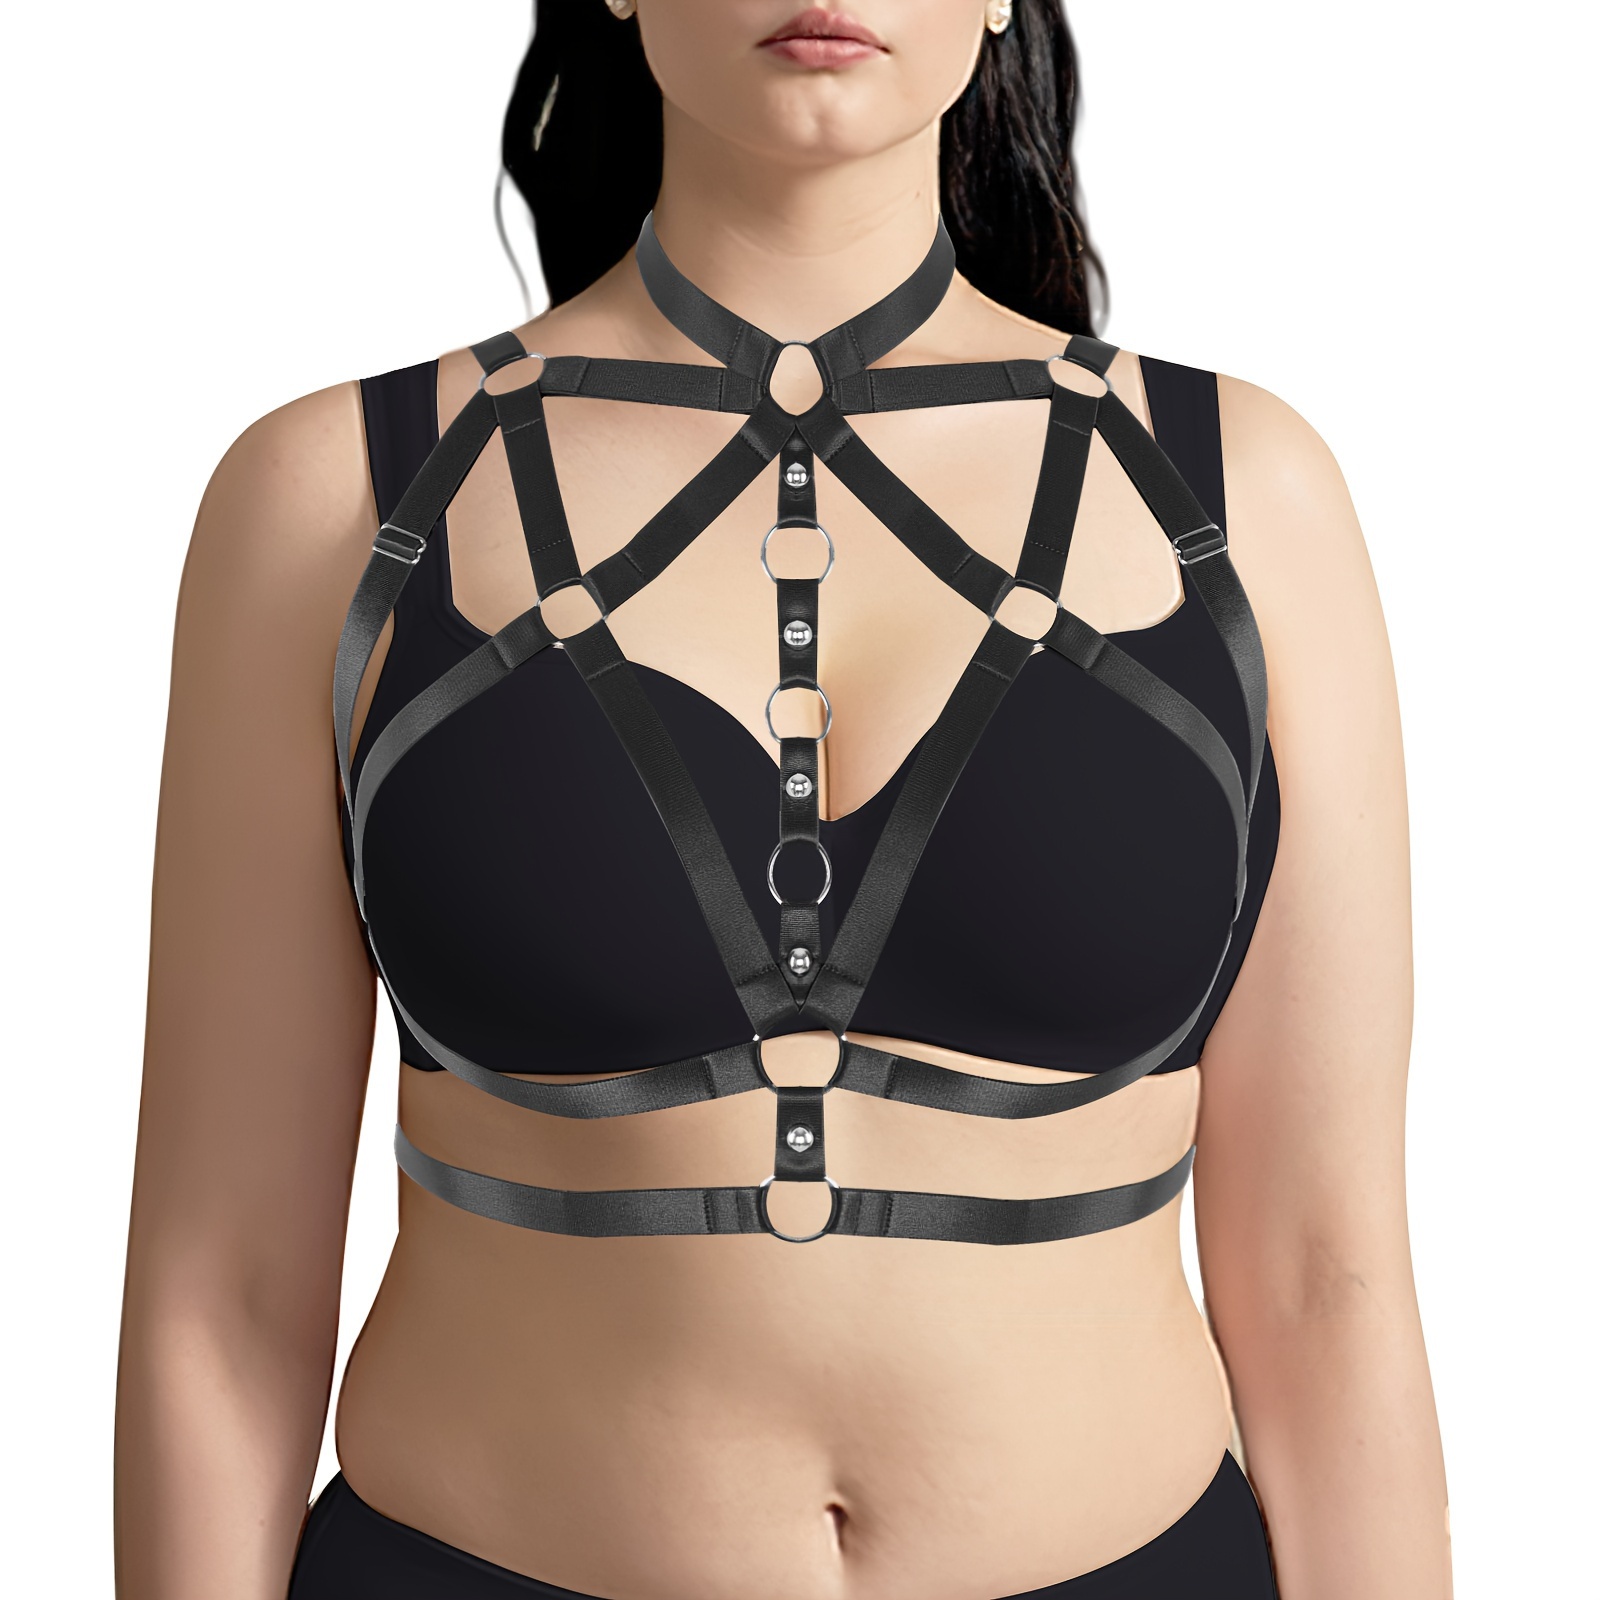 Women Body Harness Bra Elastic Adjustable Bra Punk gothic Carnival Plus  Size Adjustable Clothing Accessories